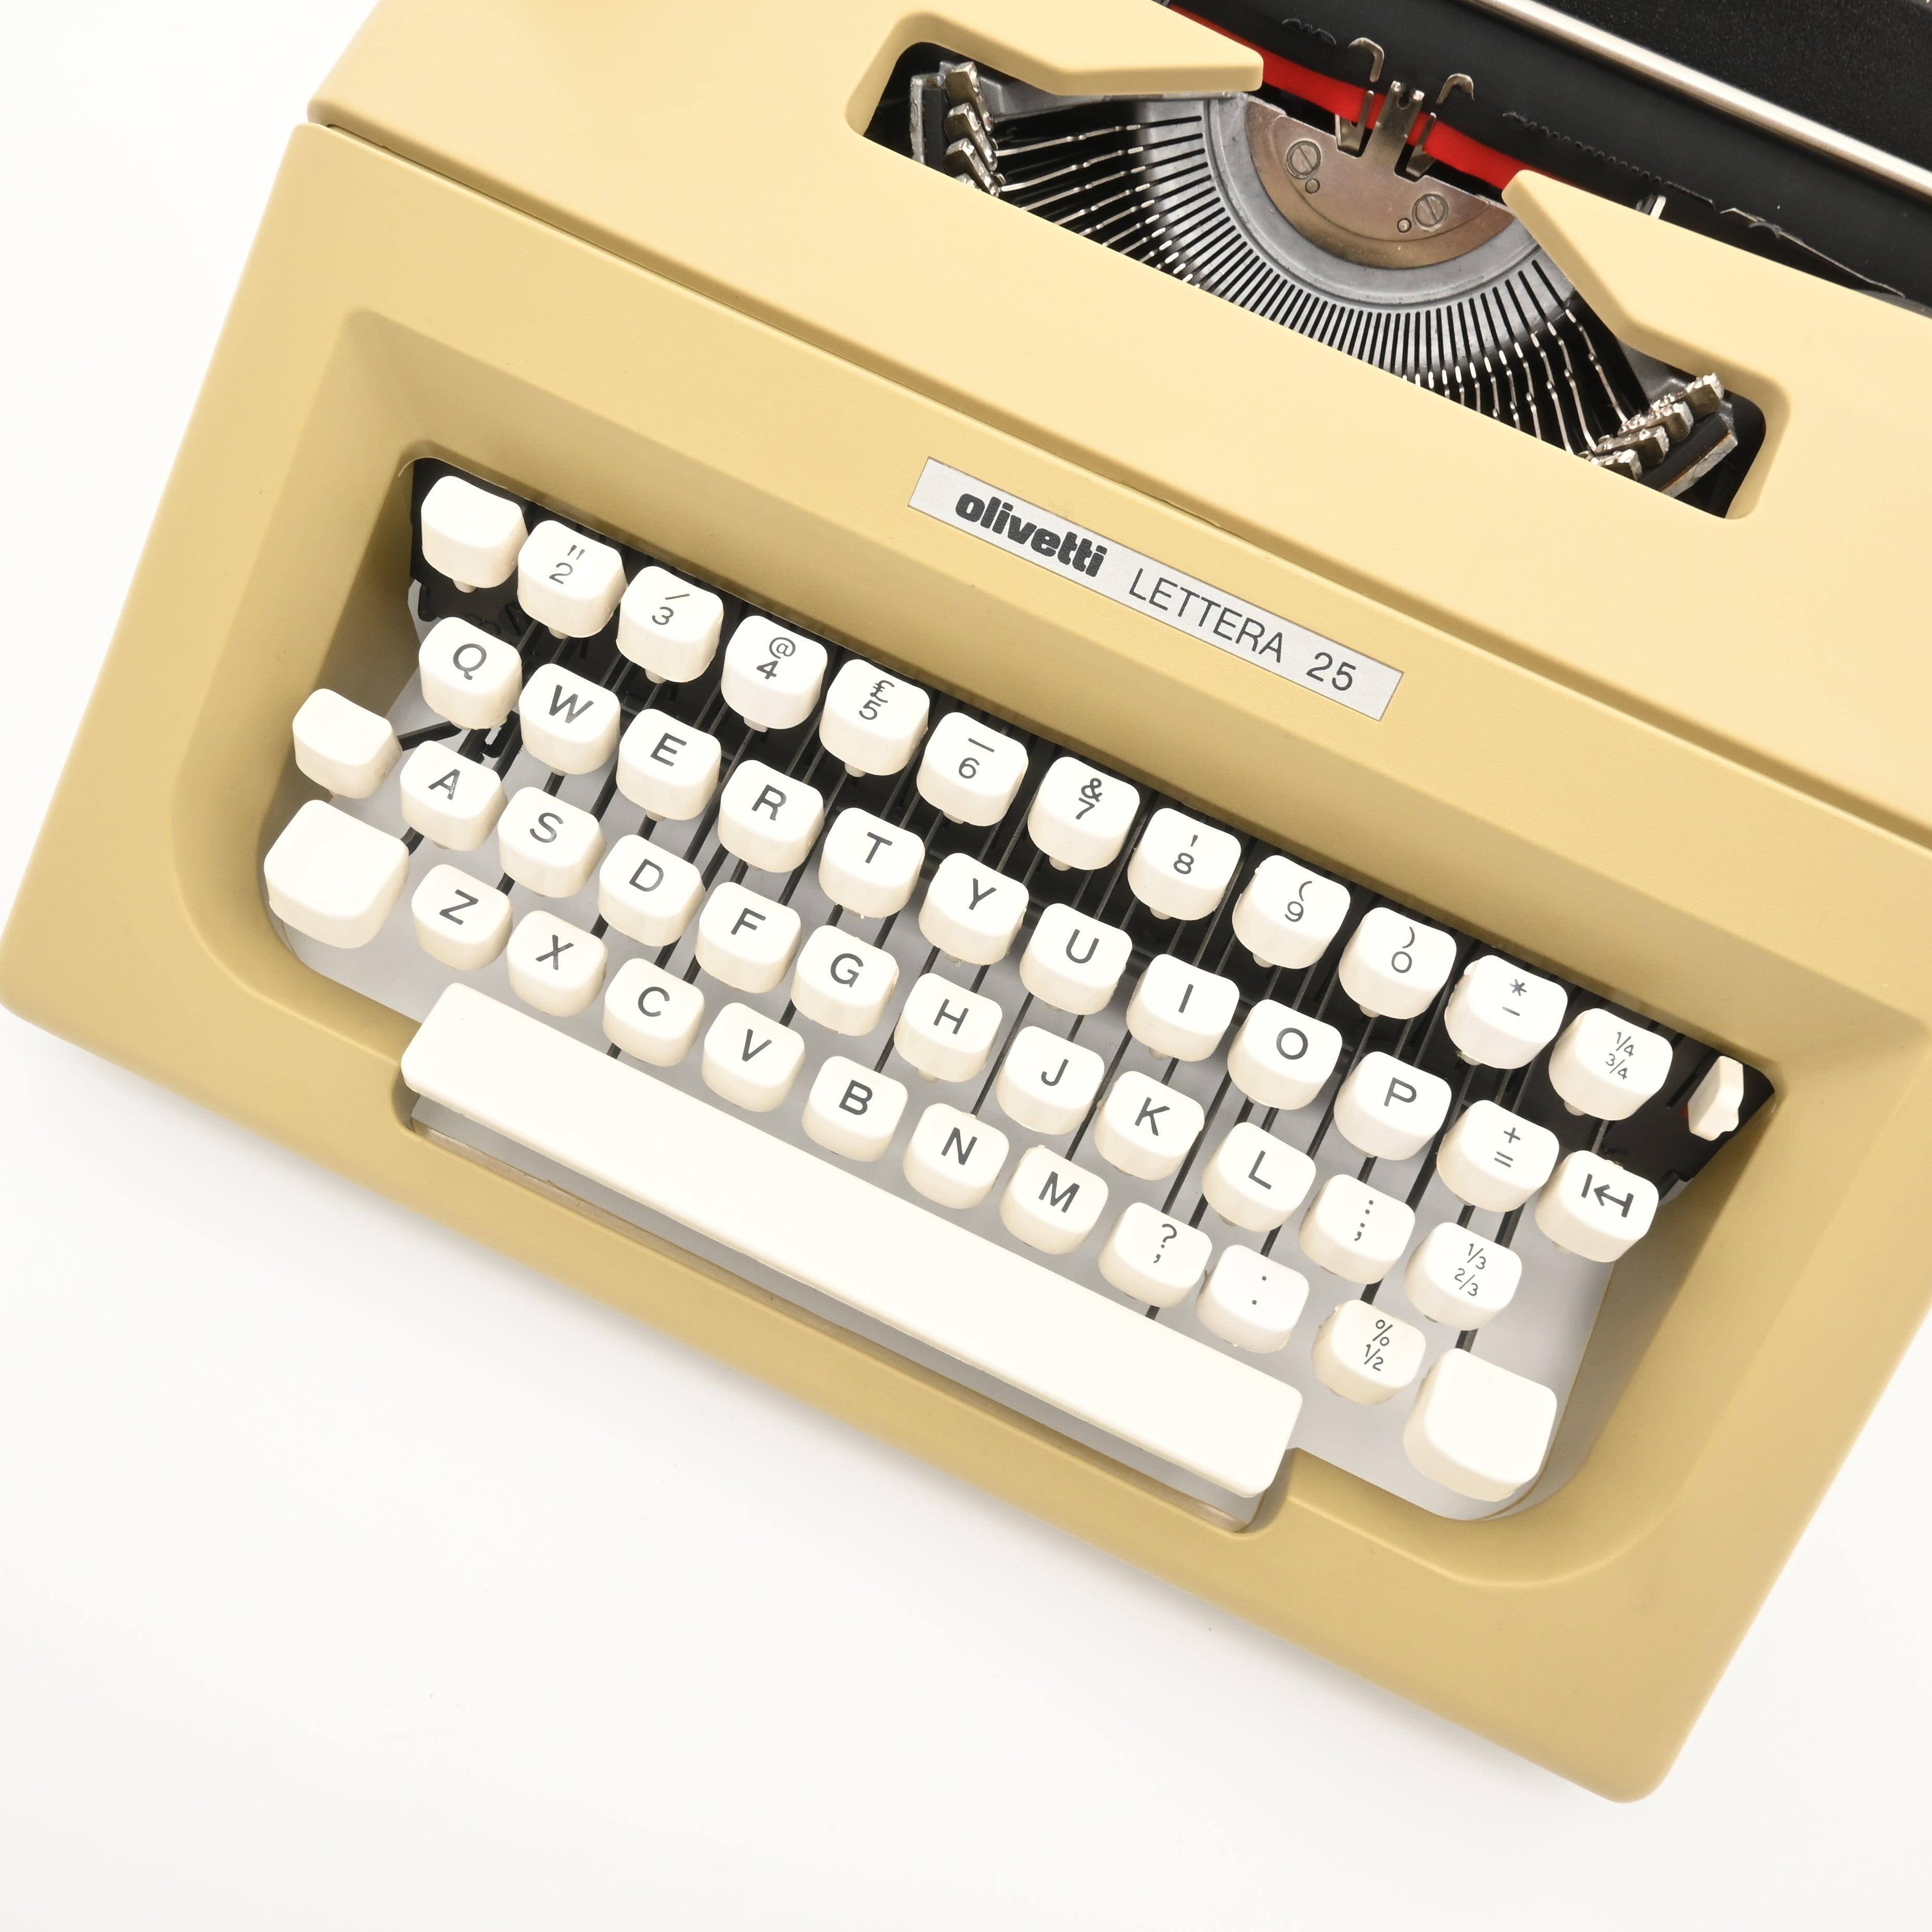 Olivetti Lettera 25 Typewriter | Red and Grey | FREE UK POSTAGE